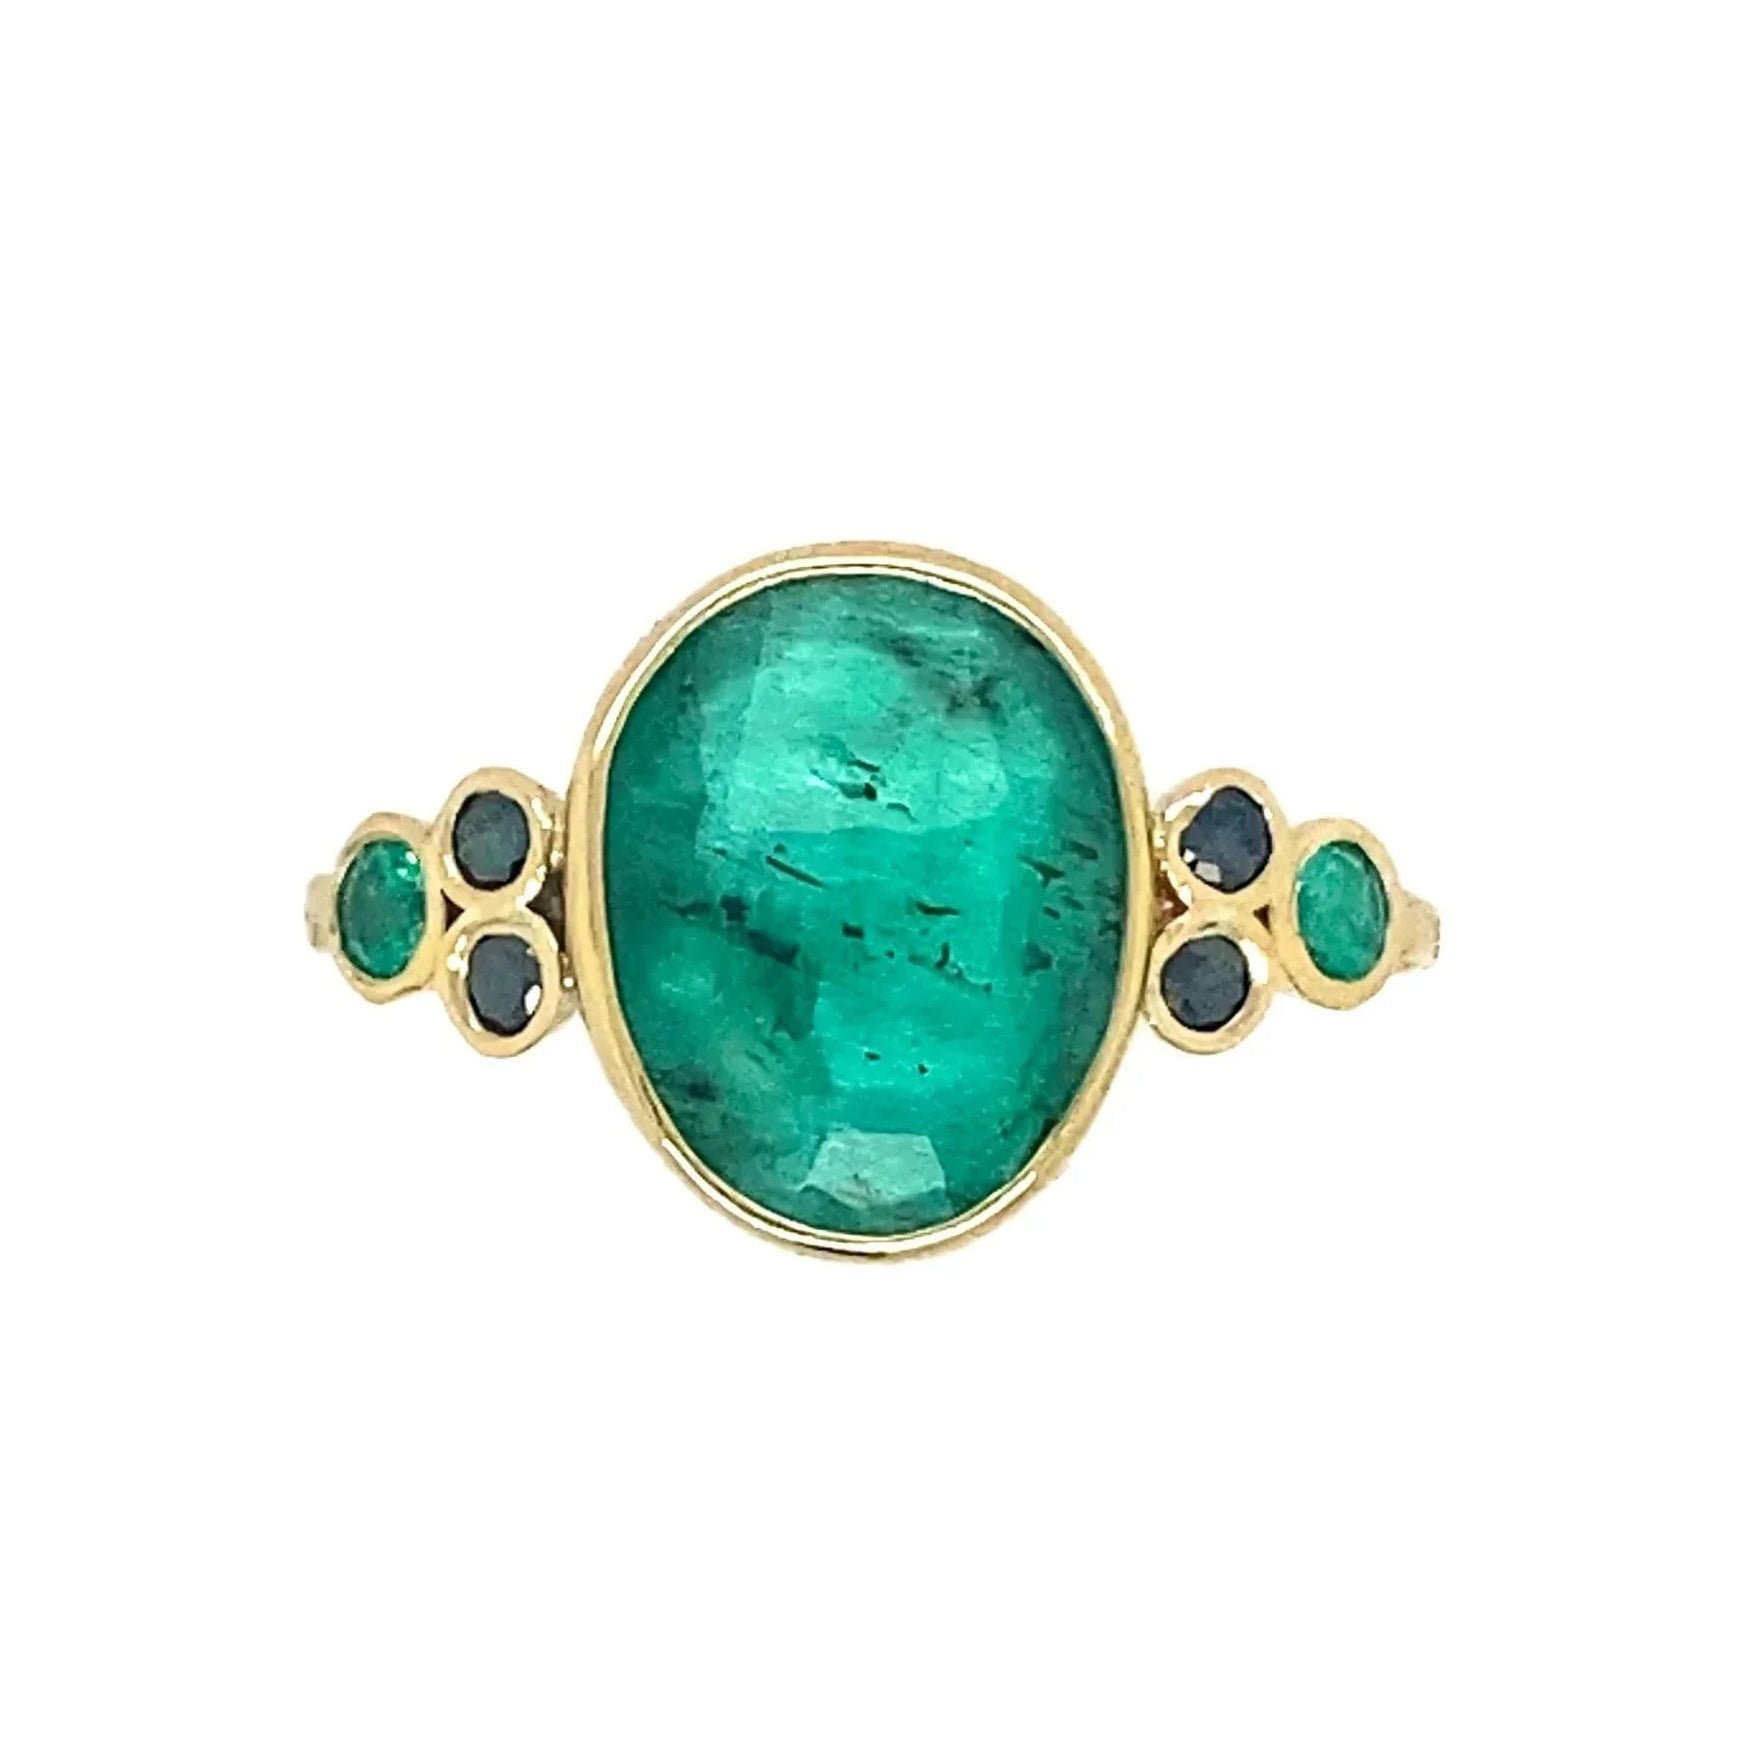 Emily Amey Custom Handmade Jewelry | Rings, Earrings & Necklaces